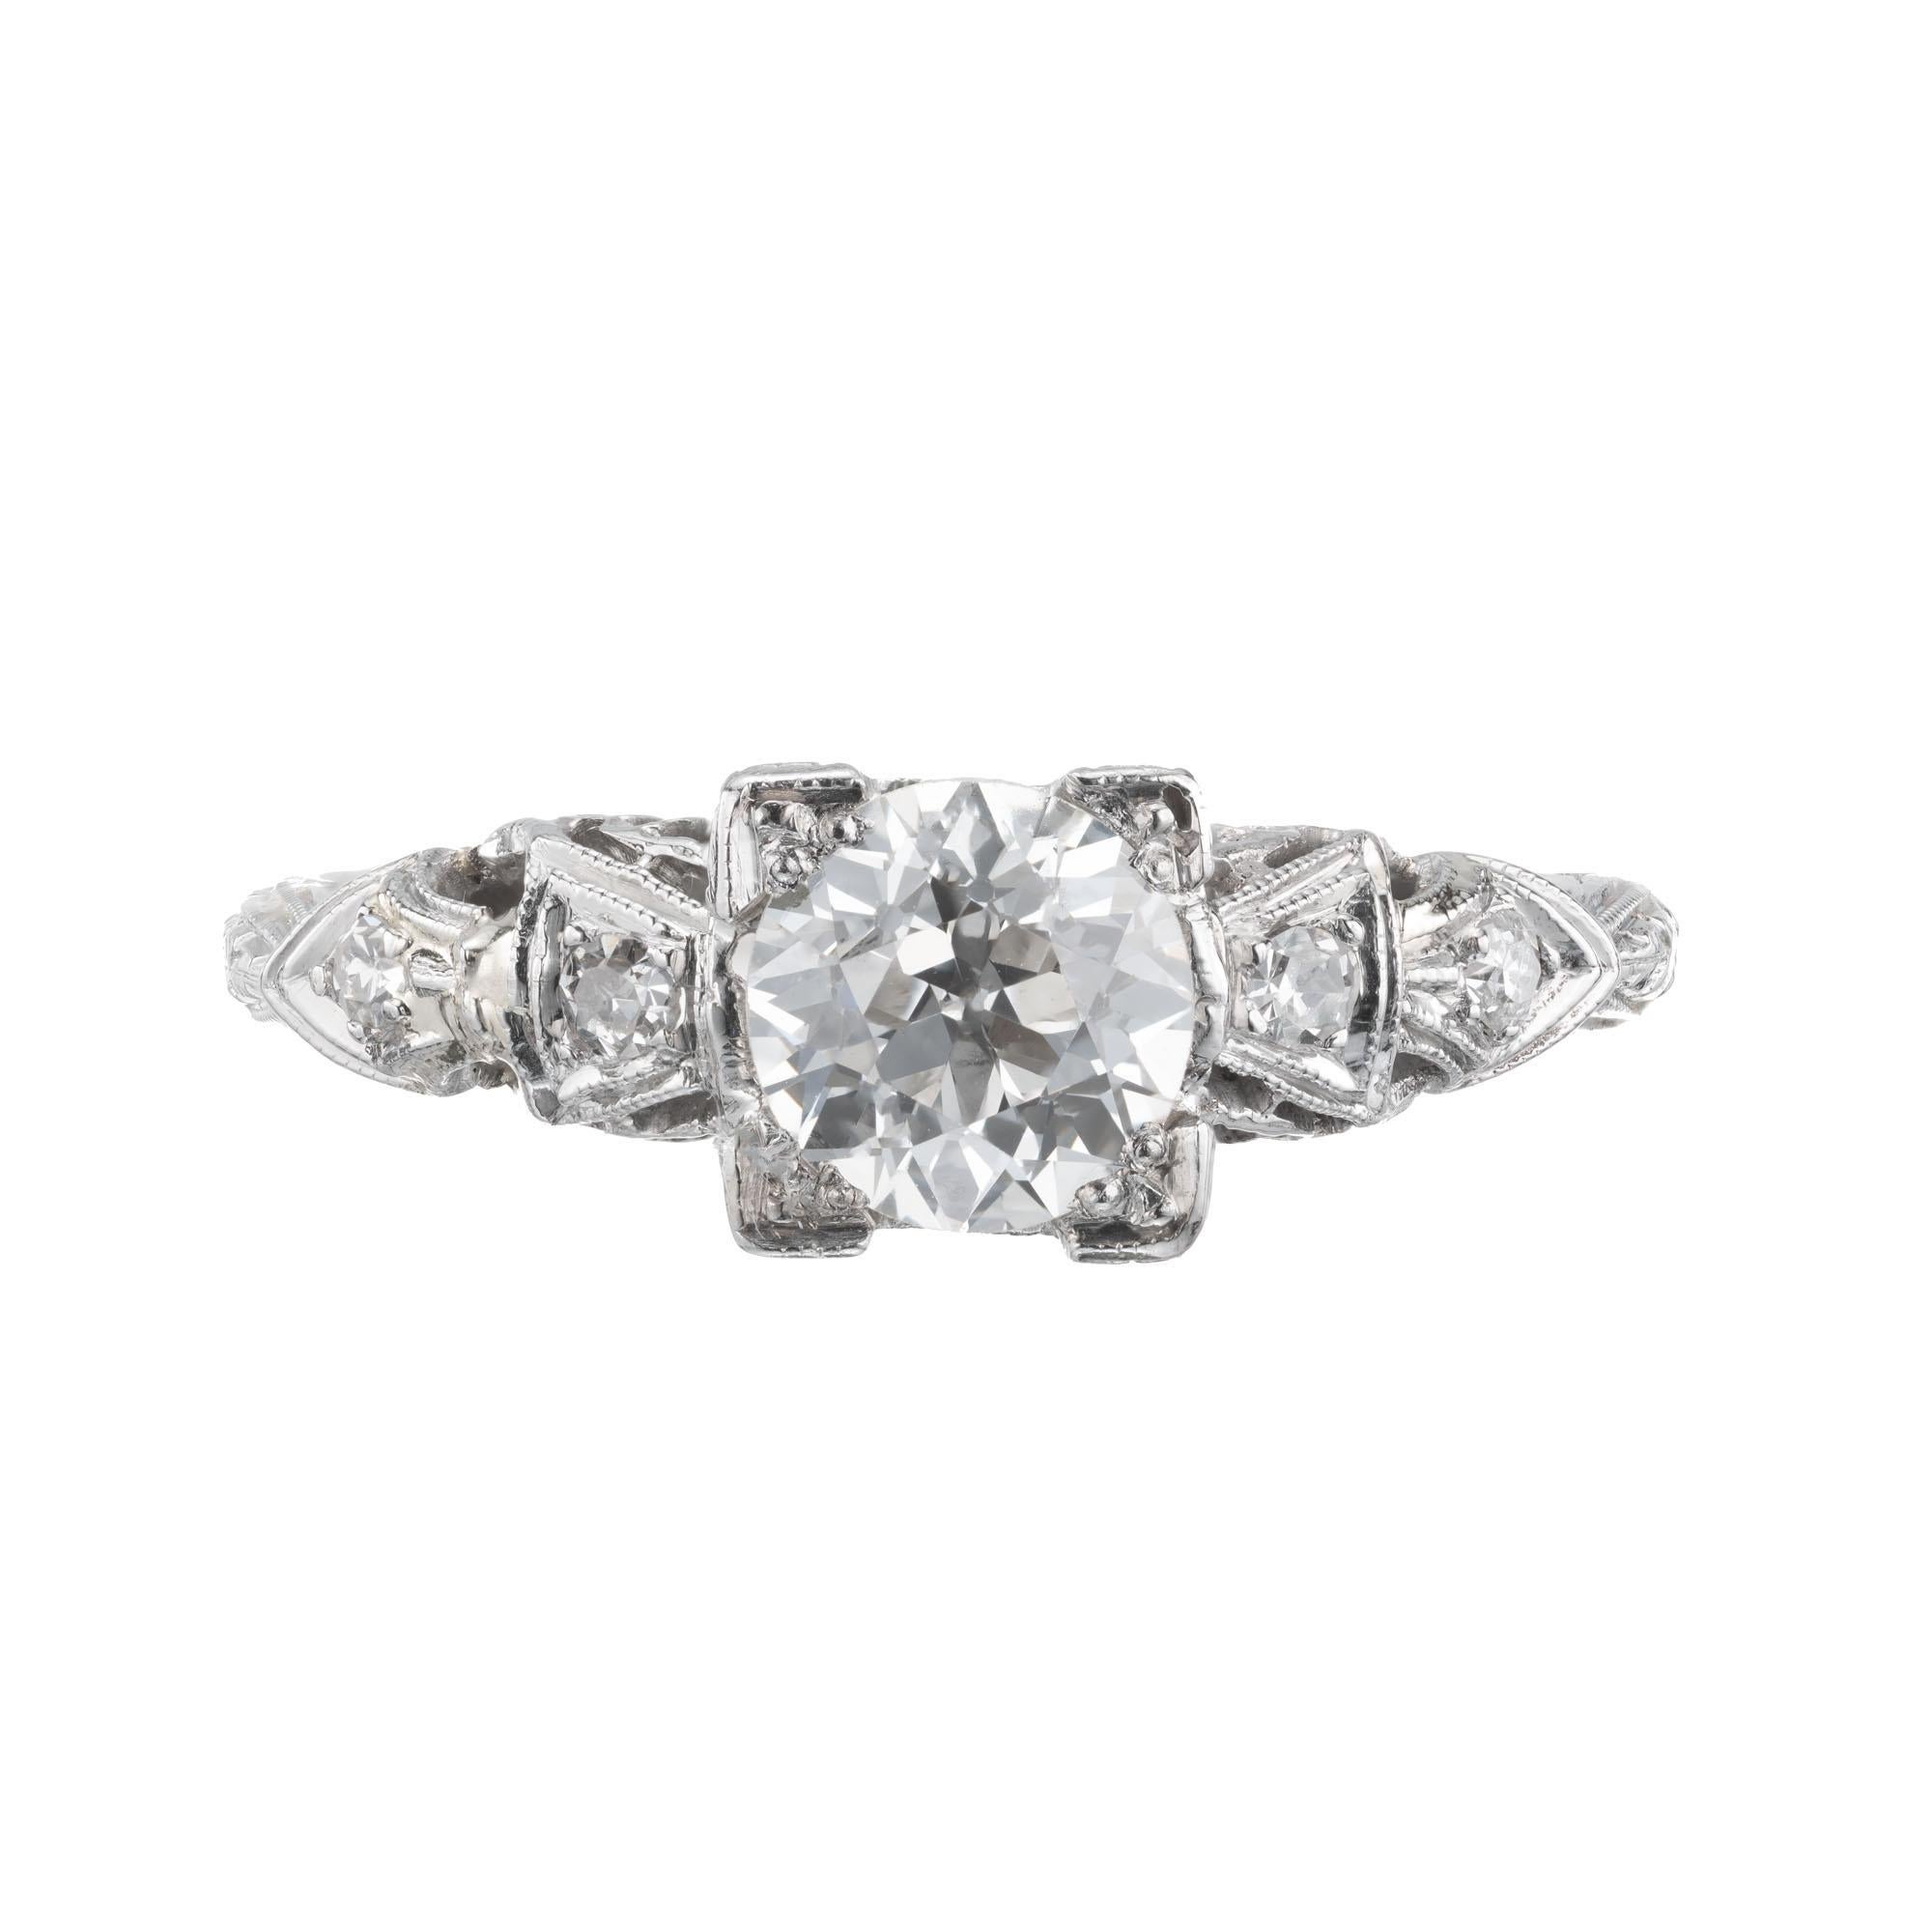 Art Deco filigree diamond platinum engagement ring. One round center diamond with 4 single cut accent diamonds. 1920-1929. 

1 old European cut diamond, approx. total weight .83cts, G – H, VS1, 
4 single cut diamonds, approx. total weight .08cts, G